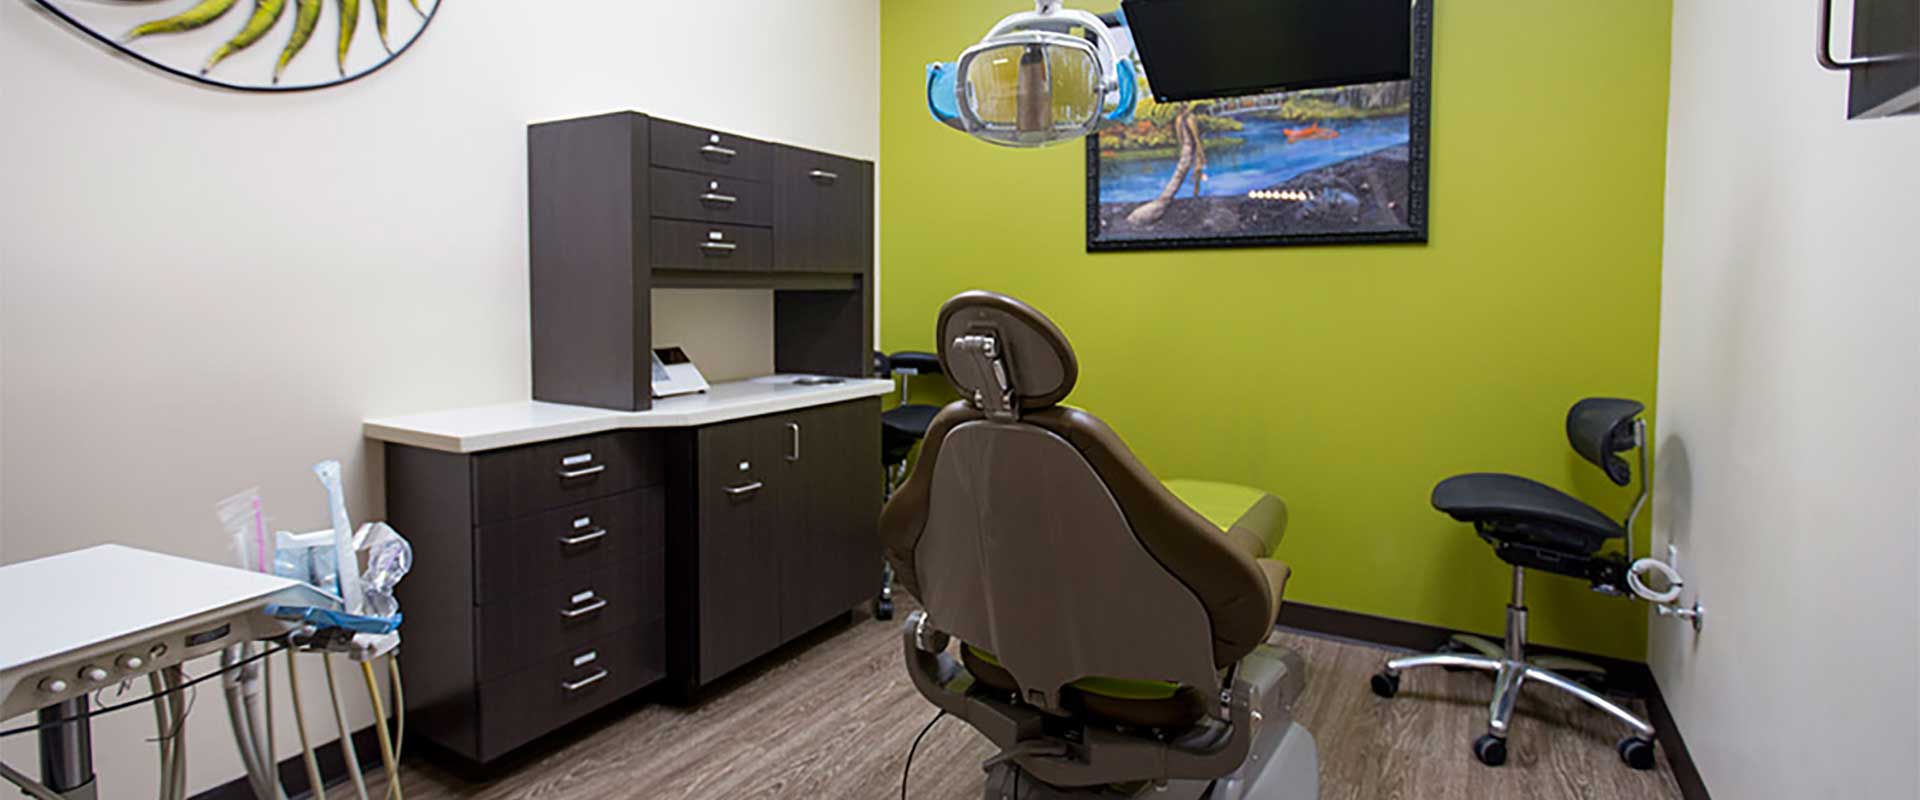 Service area of dental office